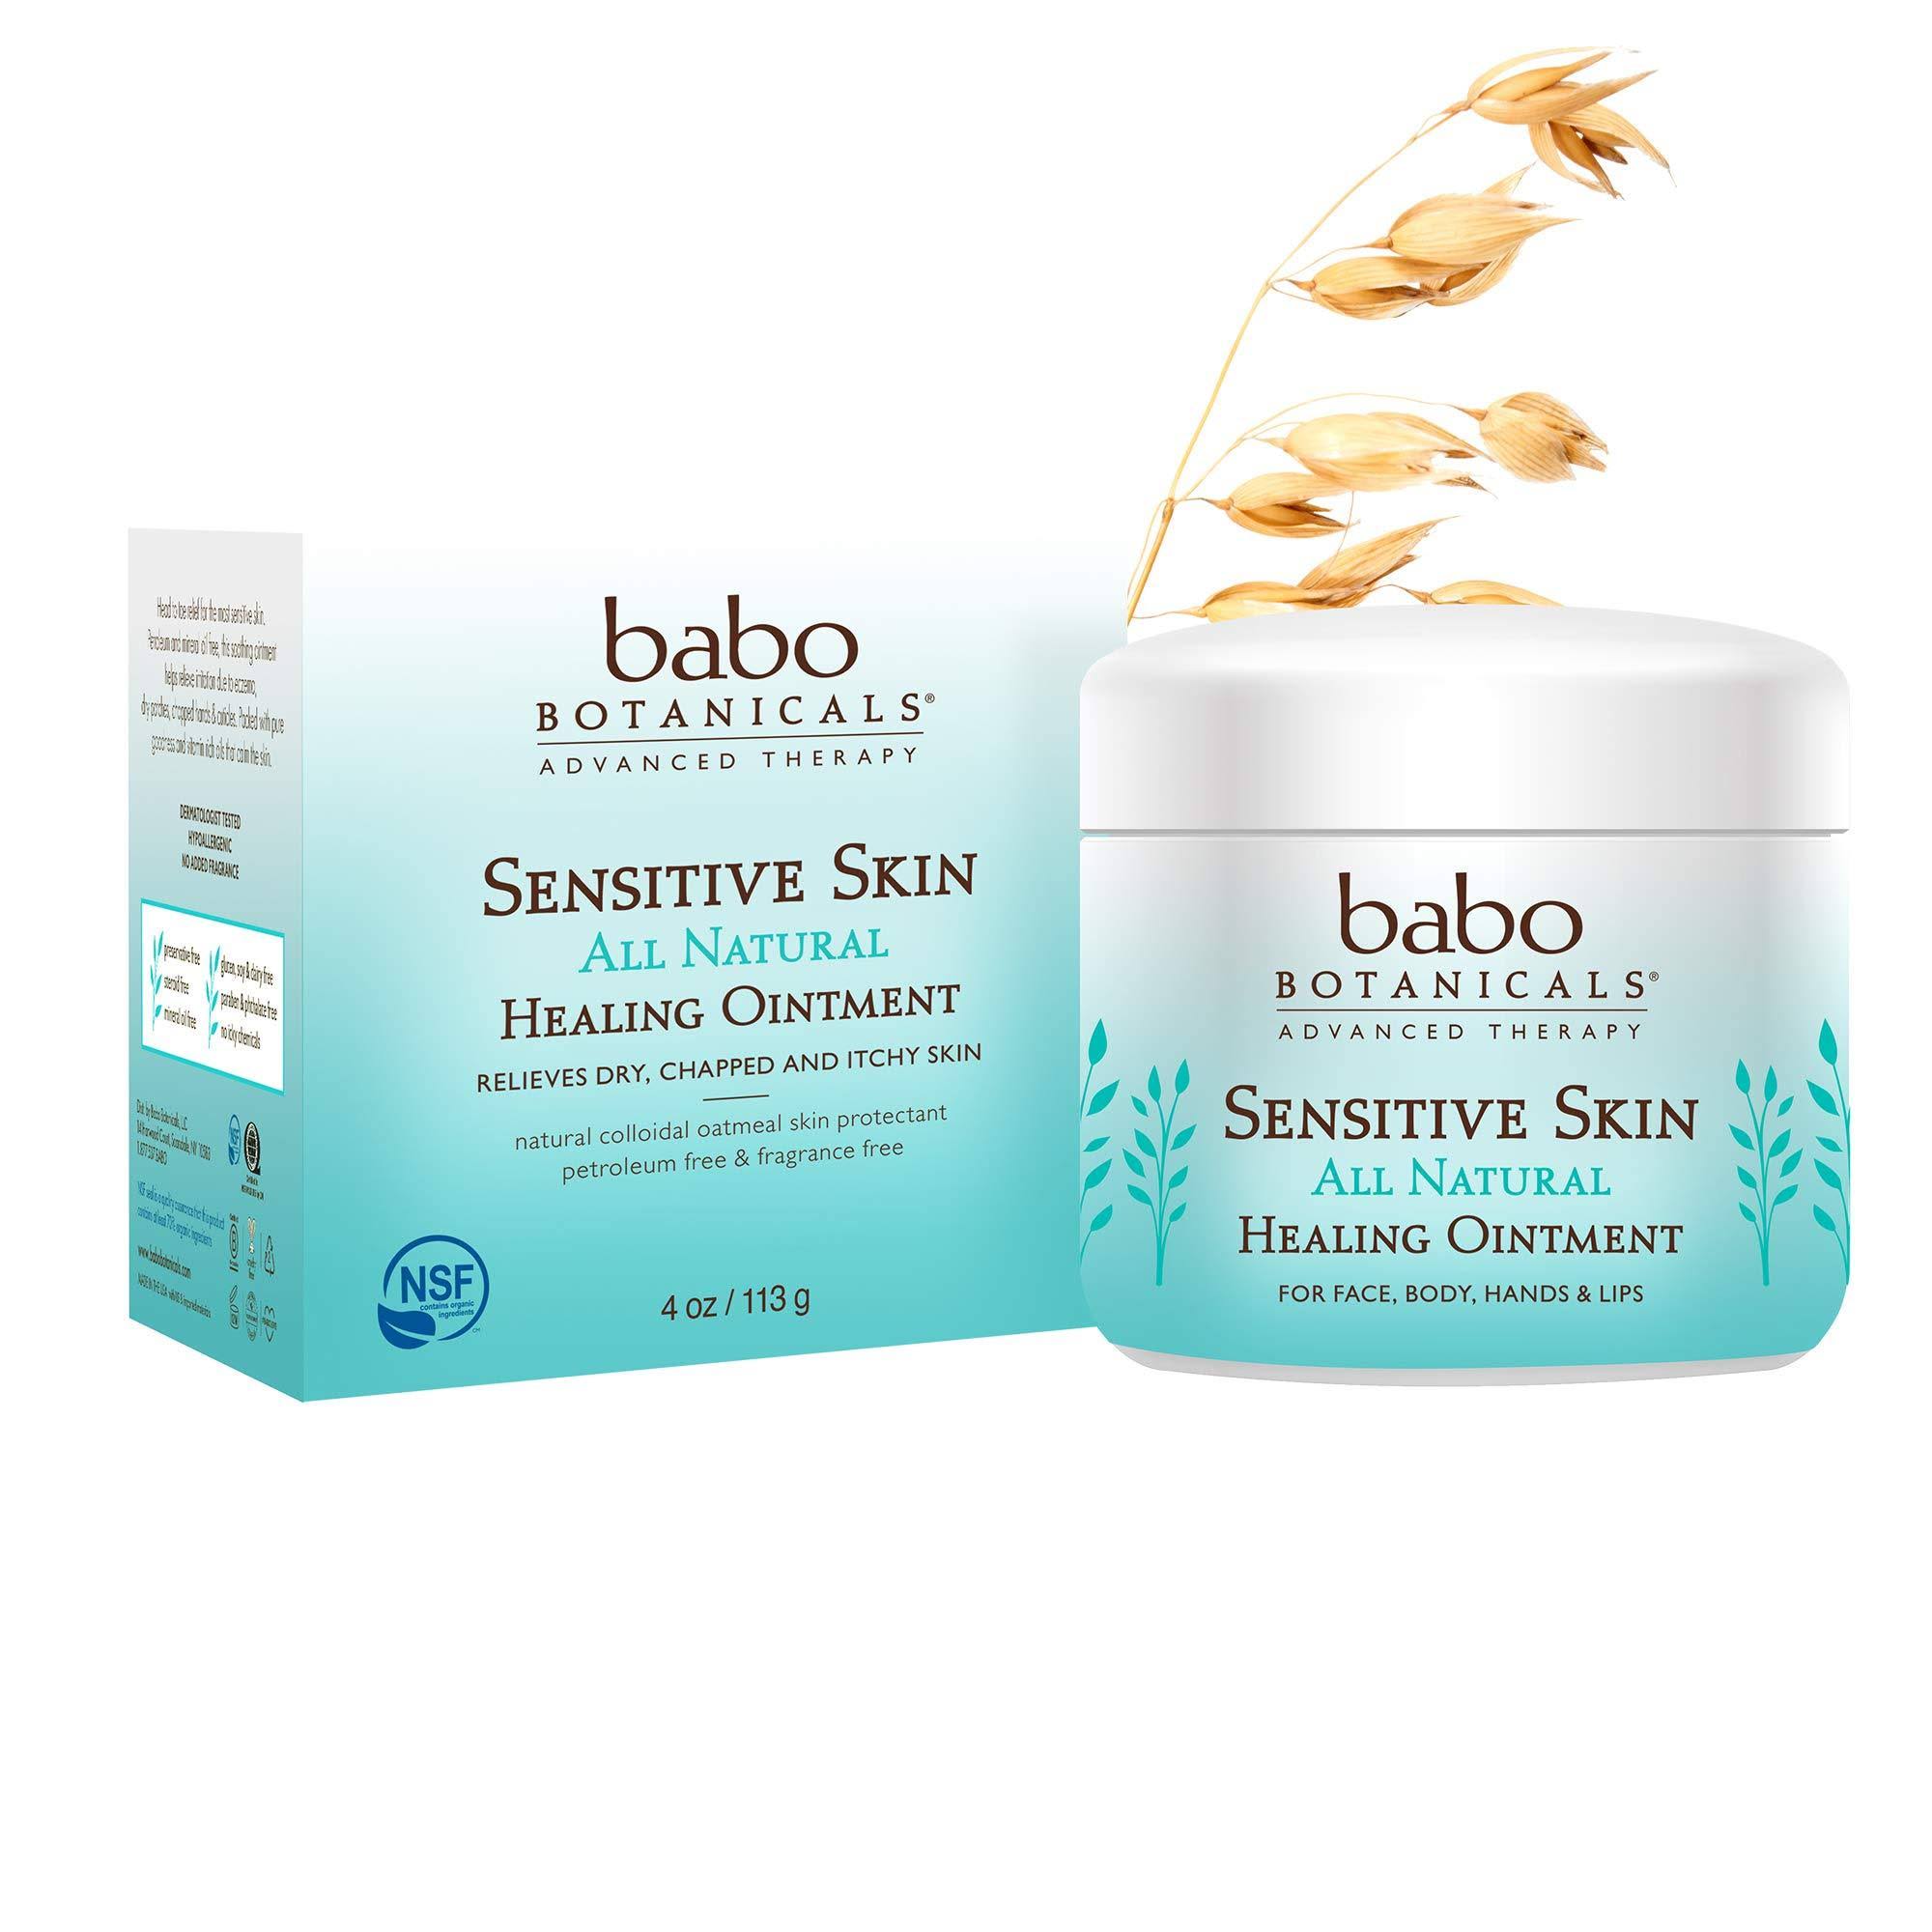 Babo botanicals sensitive skin all natural healing ointment fragrance